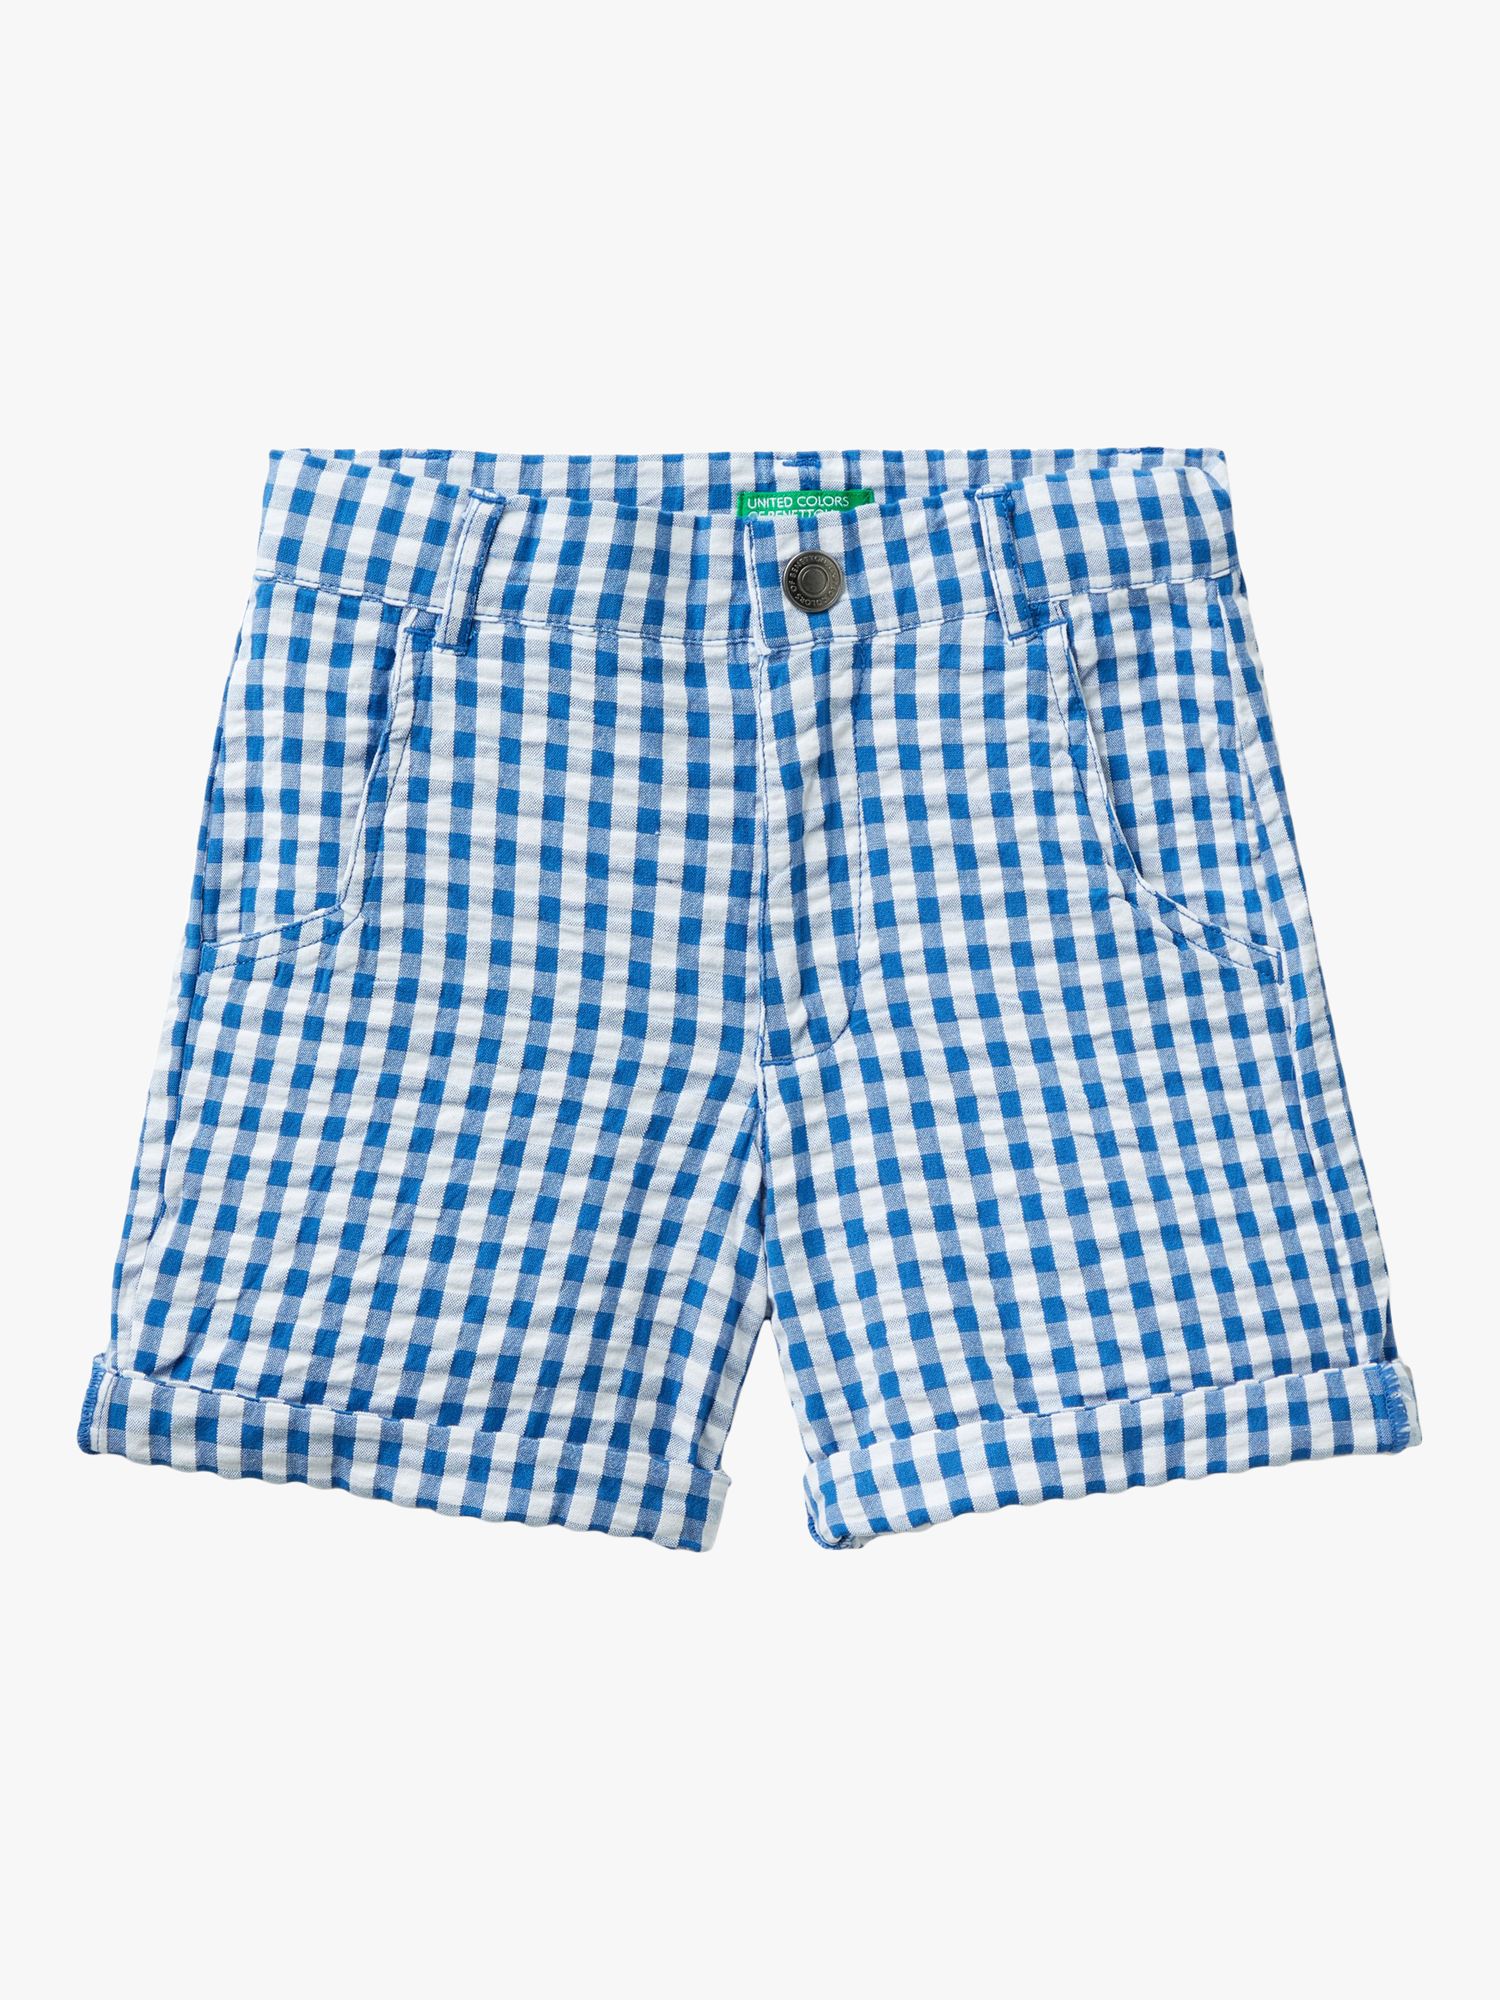 Benetton Kids' Gingham Cotton Shorts, Blue/White, 3-4 years